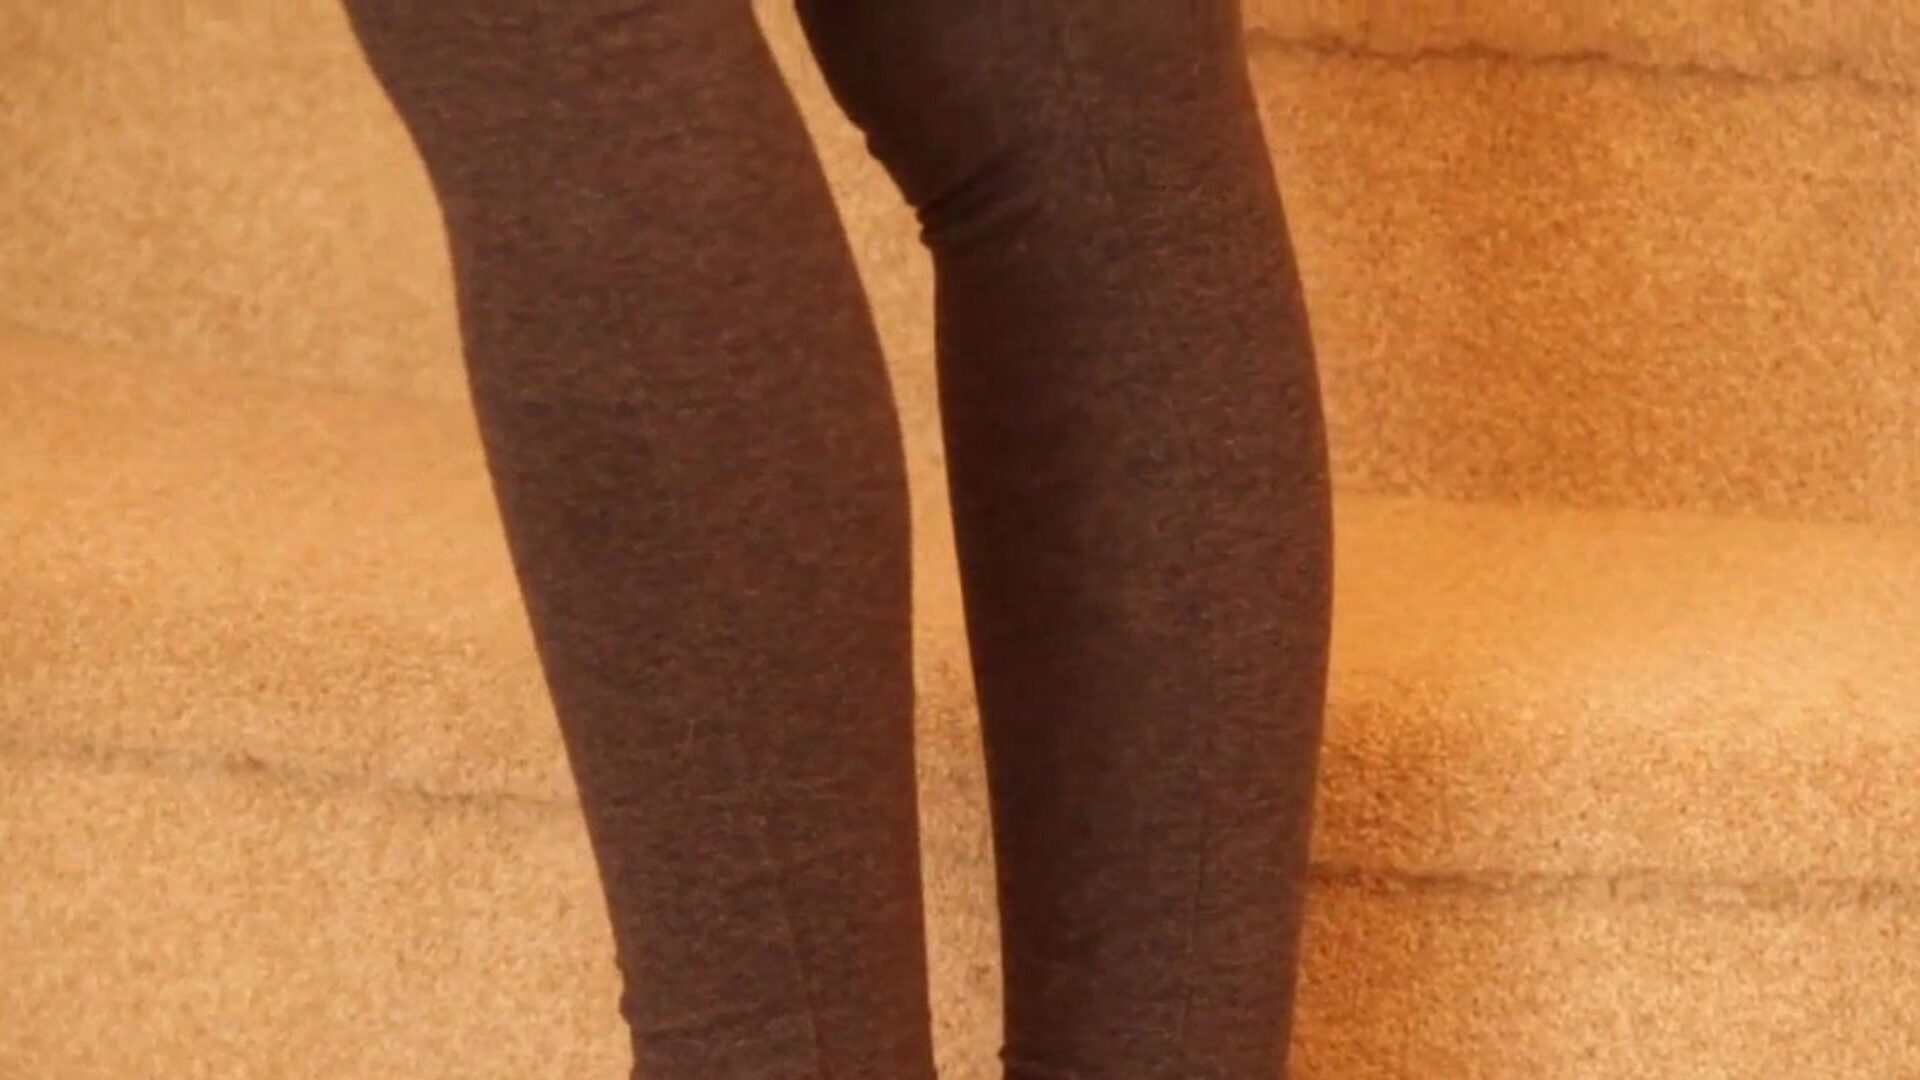 Rachel Williams Grey Leggings